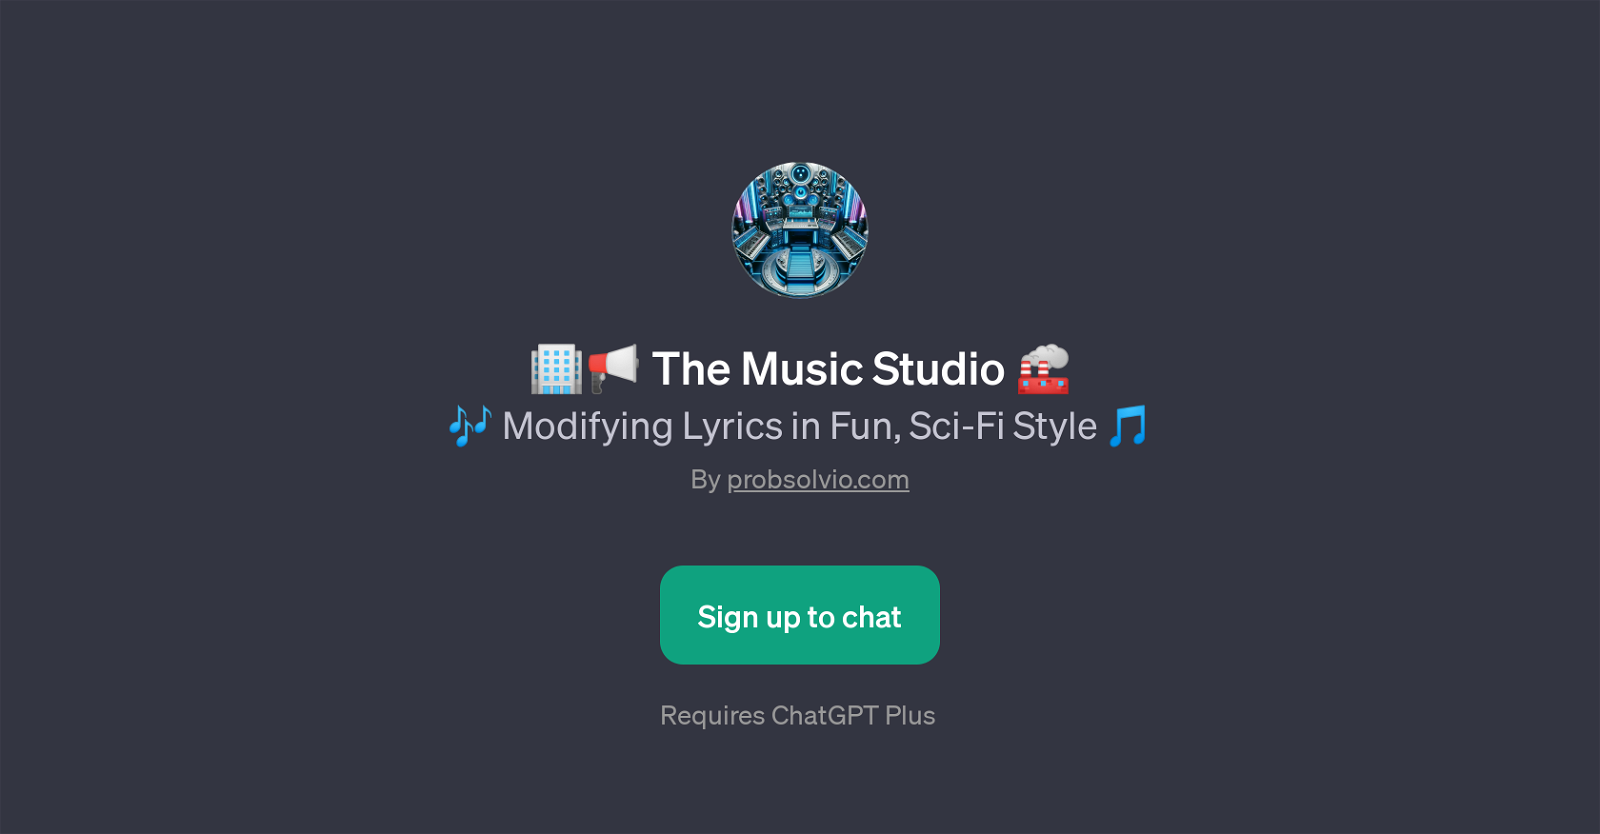 The Music Studio website